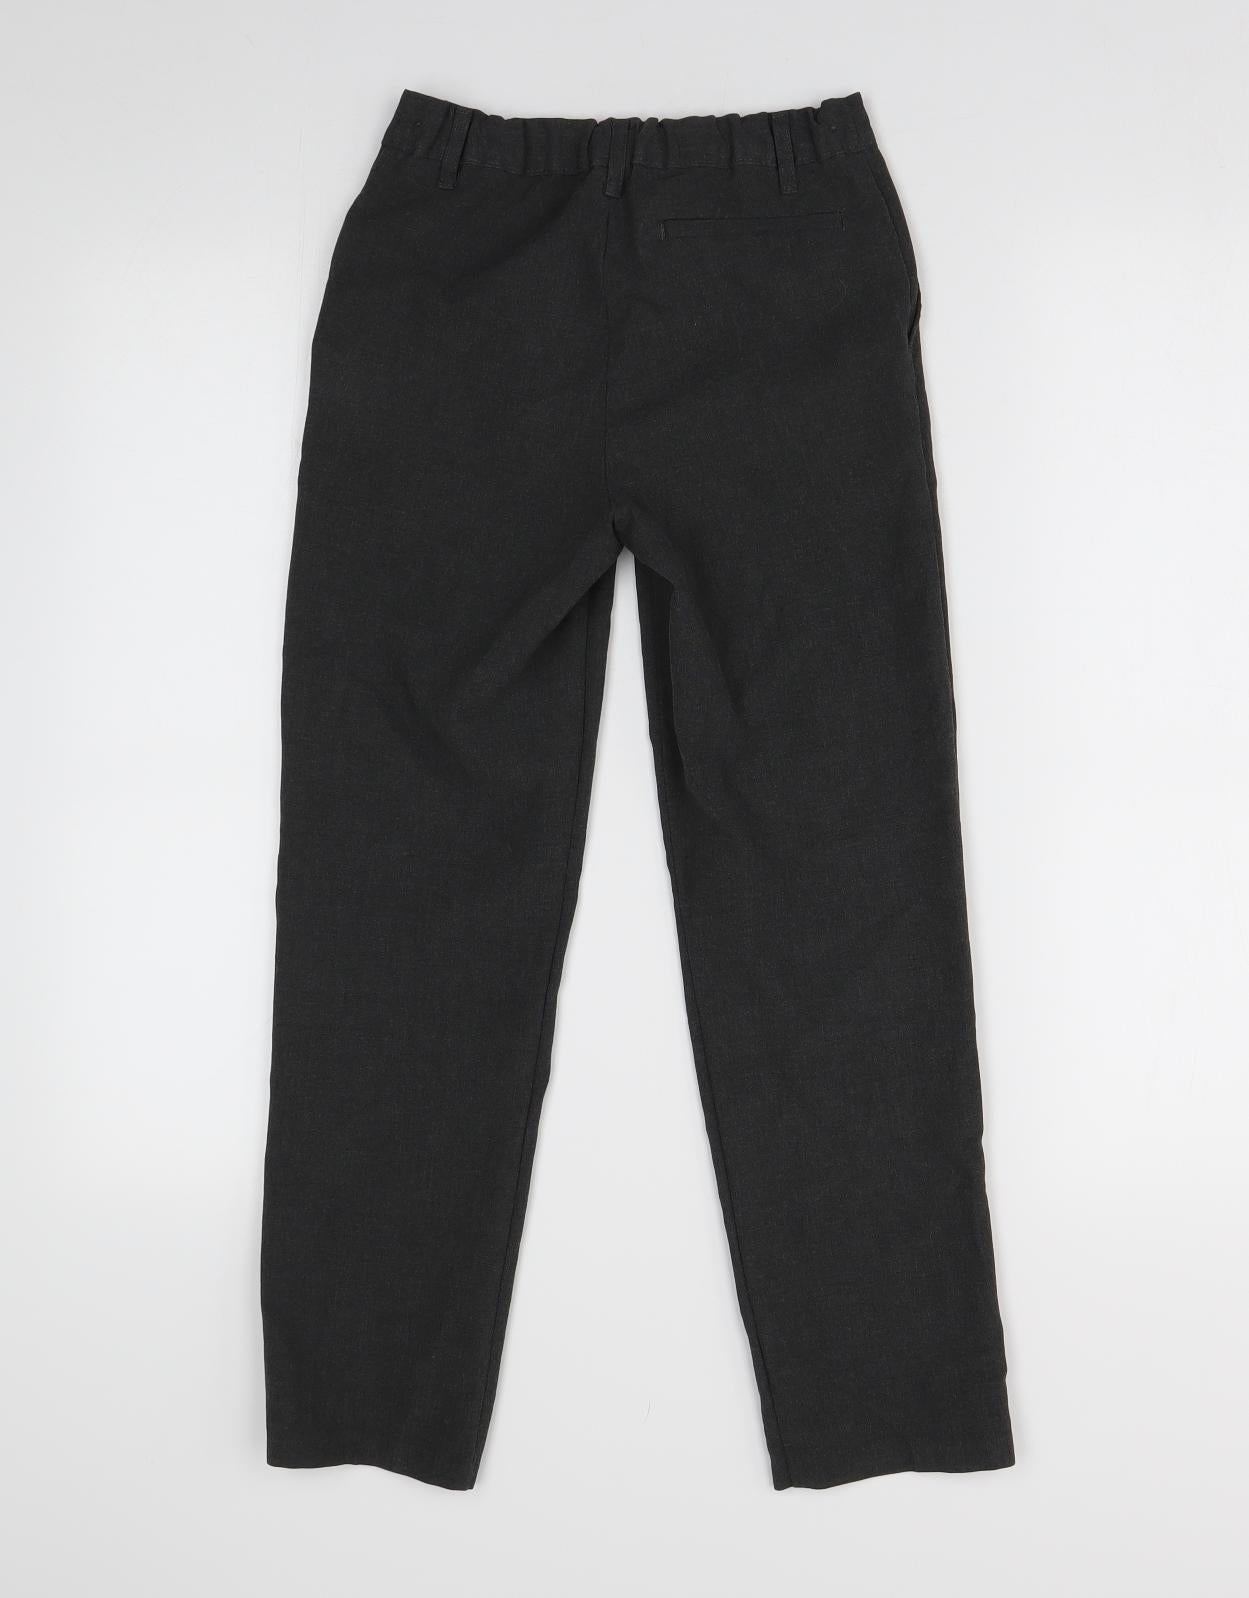 M&S Boys Grey   Dress Pants Trousers Size 9-10 Years